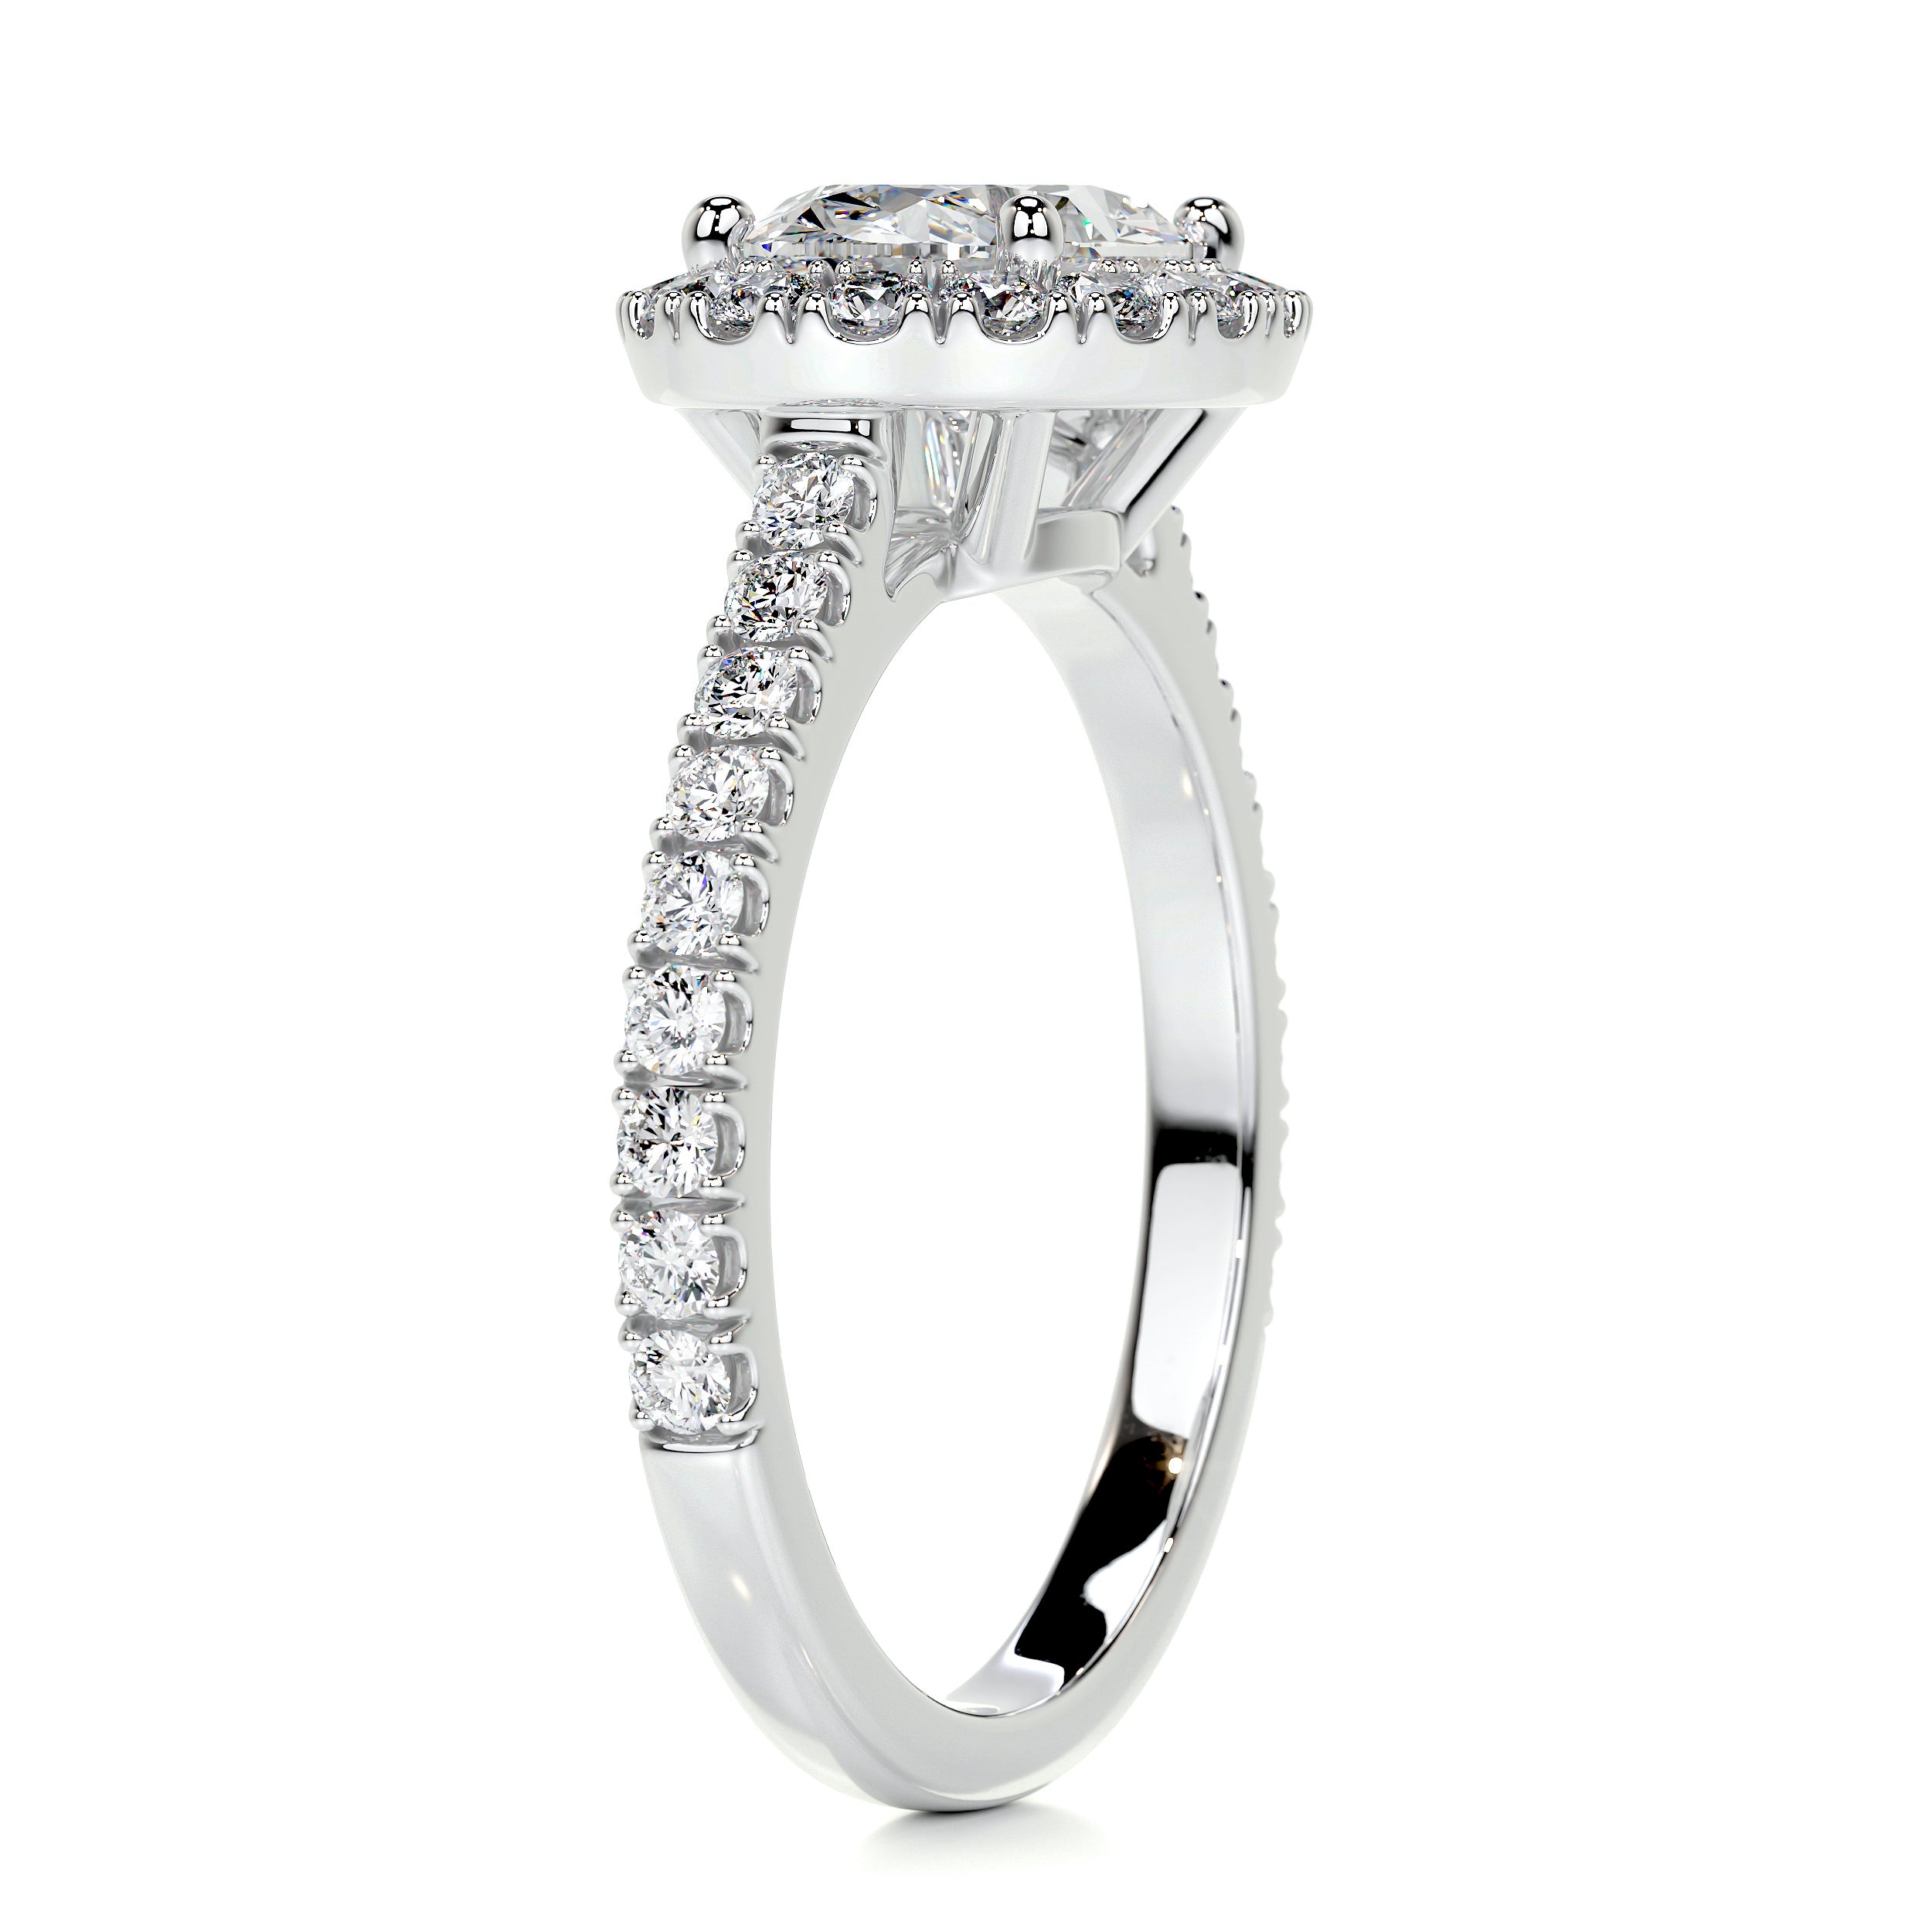 Alessandra Diamond Engagement Ring   (1.30 Carat) -18K White Gold